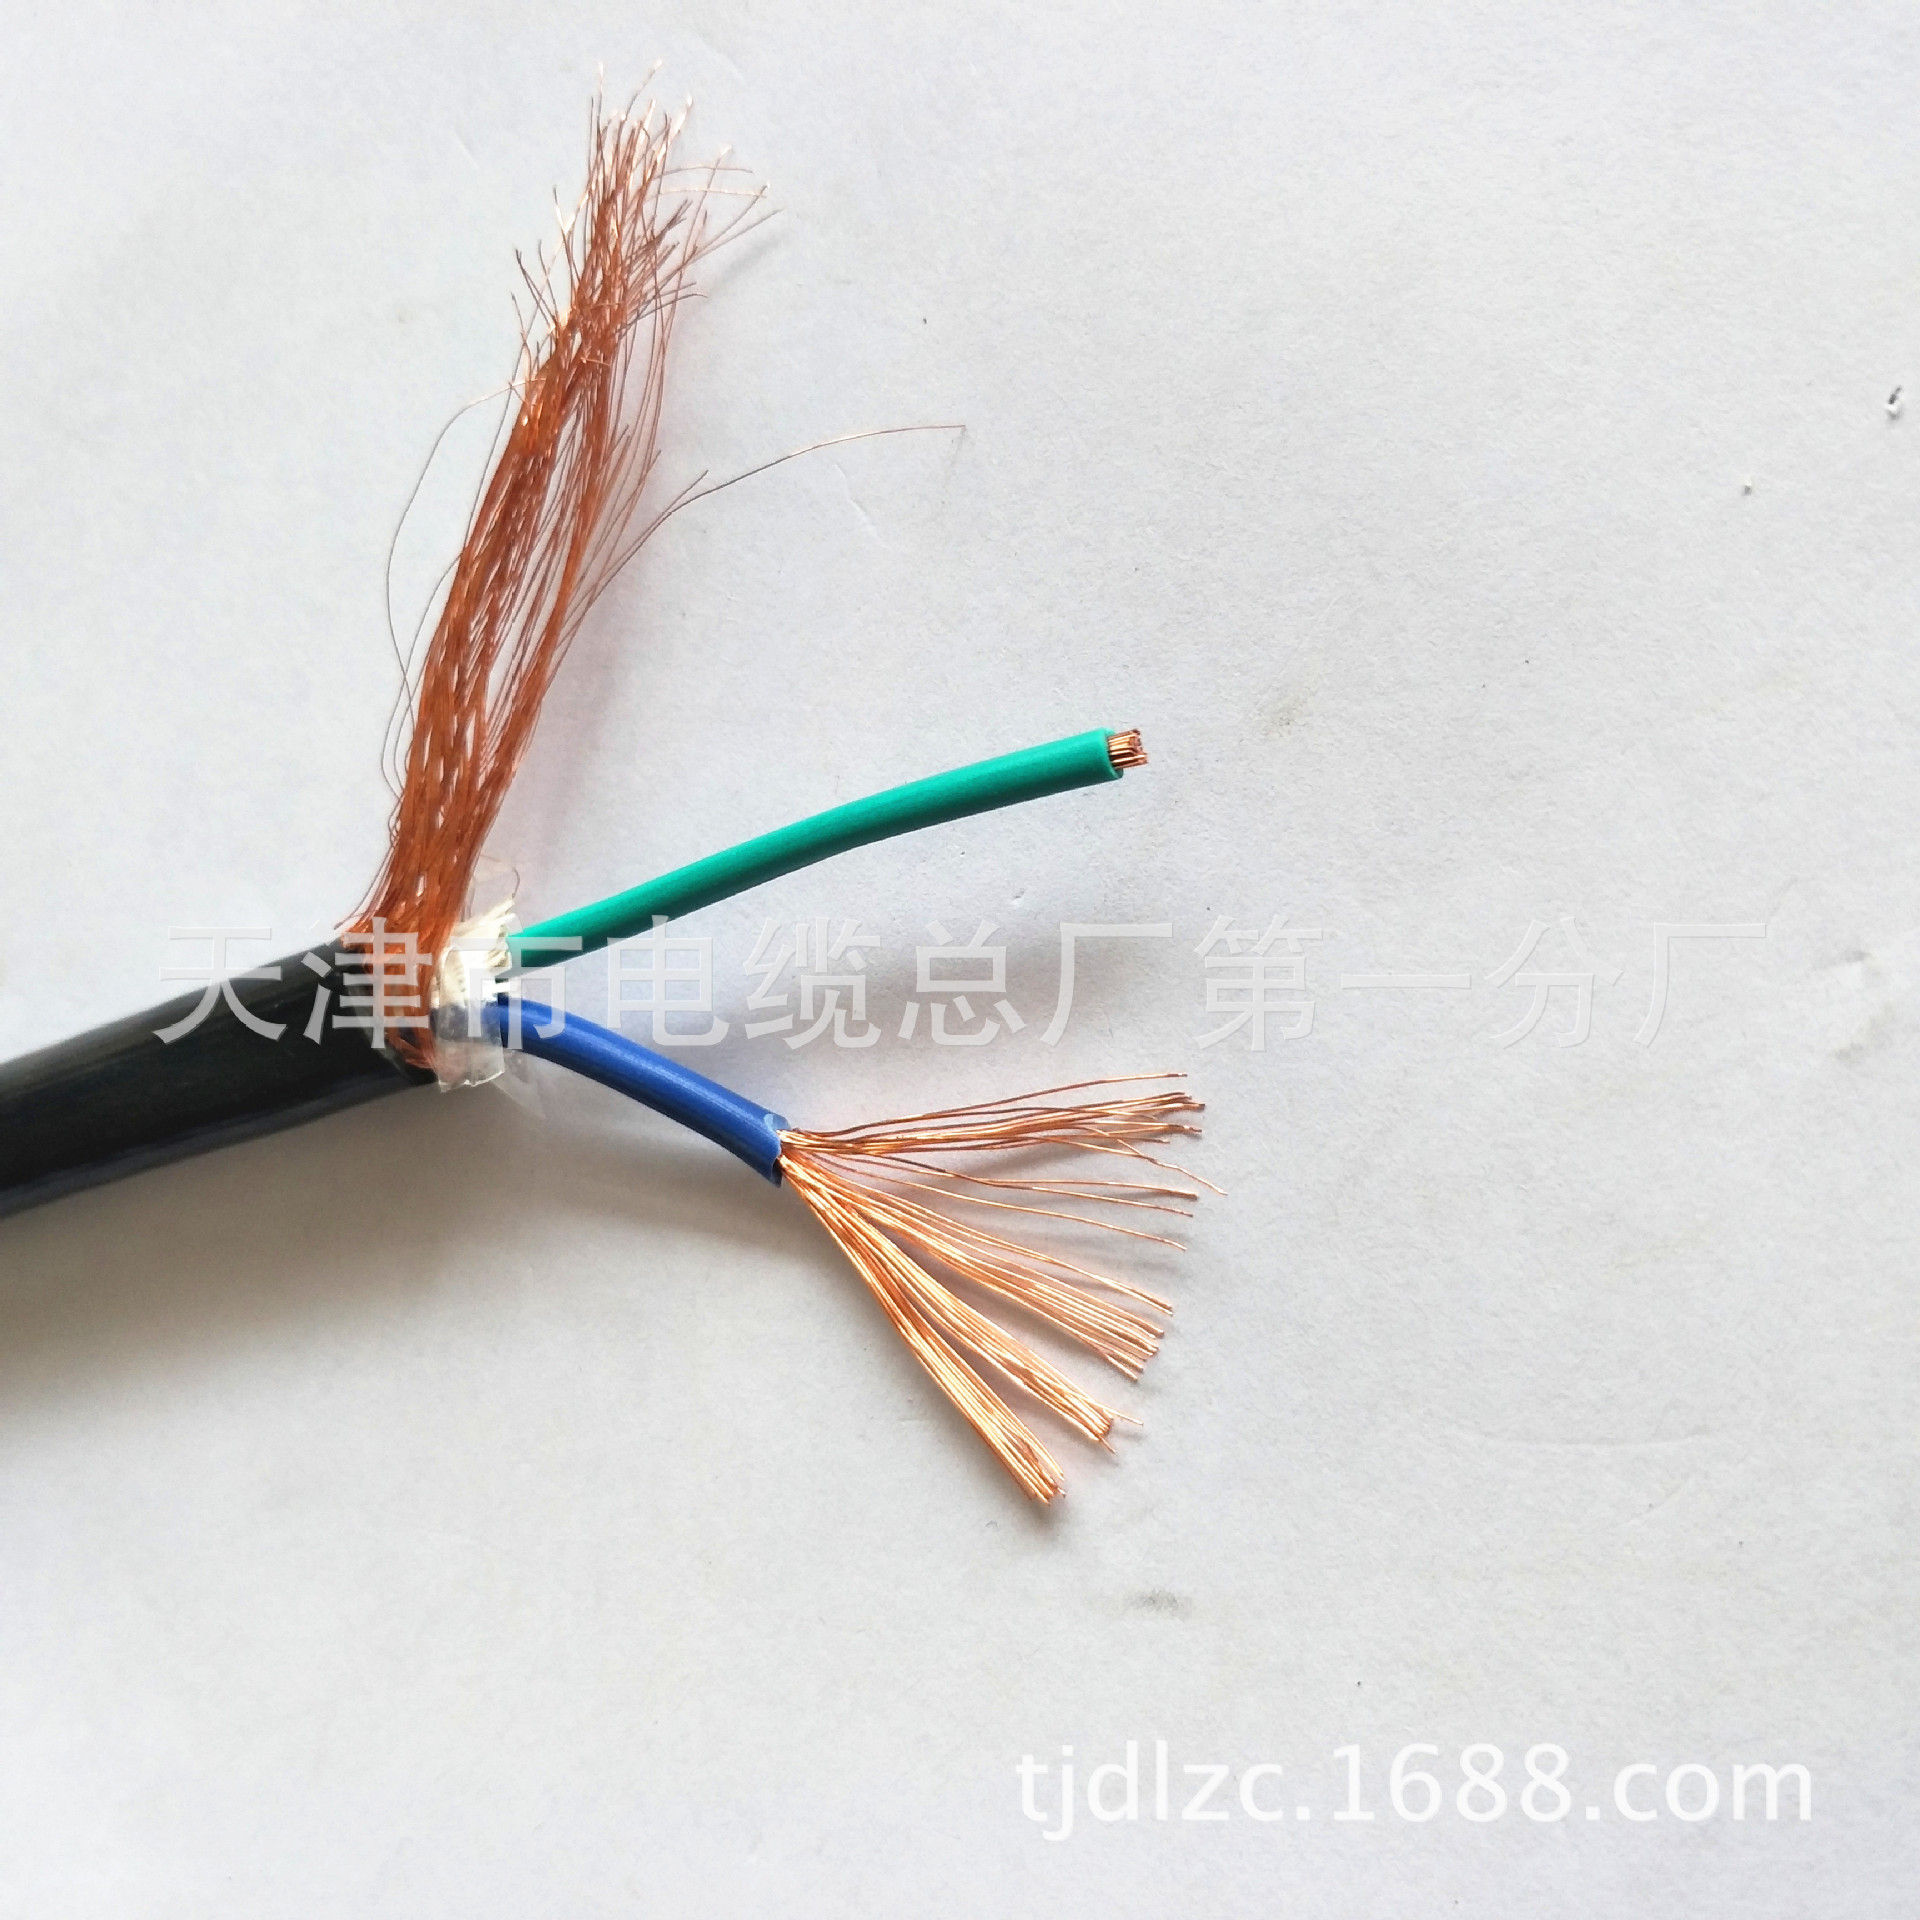 ZR-MKVVRP 450/750v 矿用屏蔽控制电缆 国标GB生产质量保障示例图4